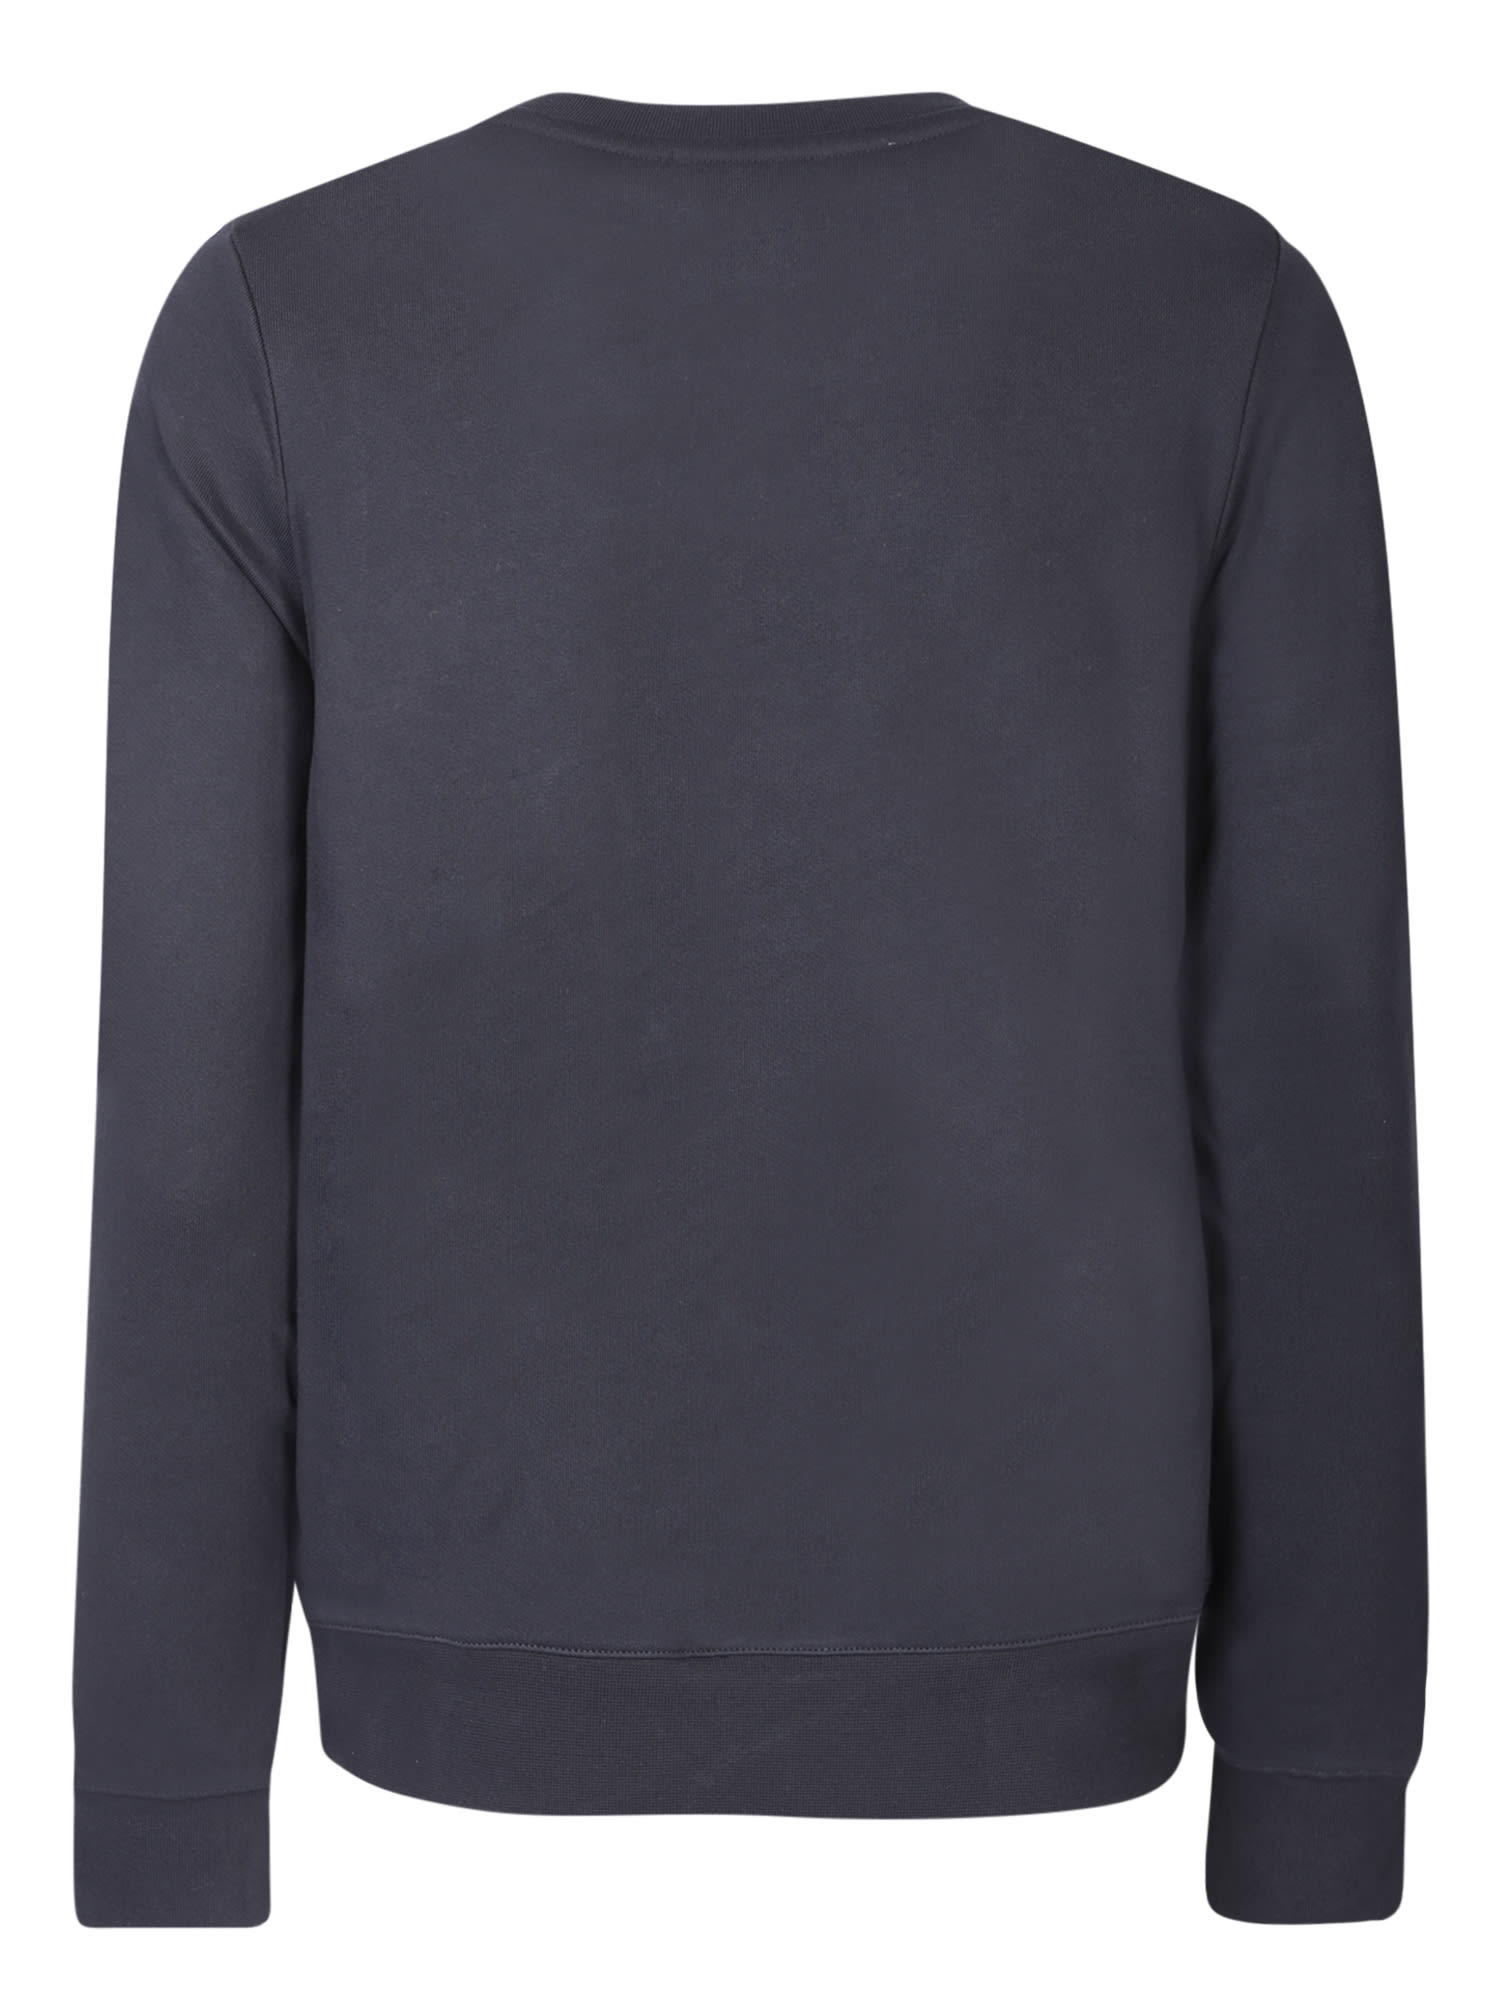 Shop Apc Tina Black Sweatshirt